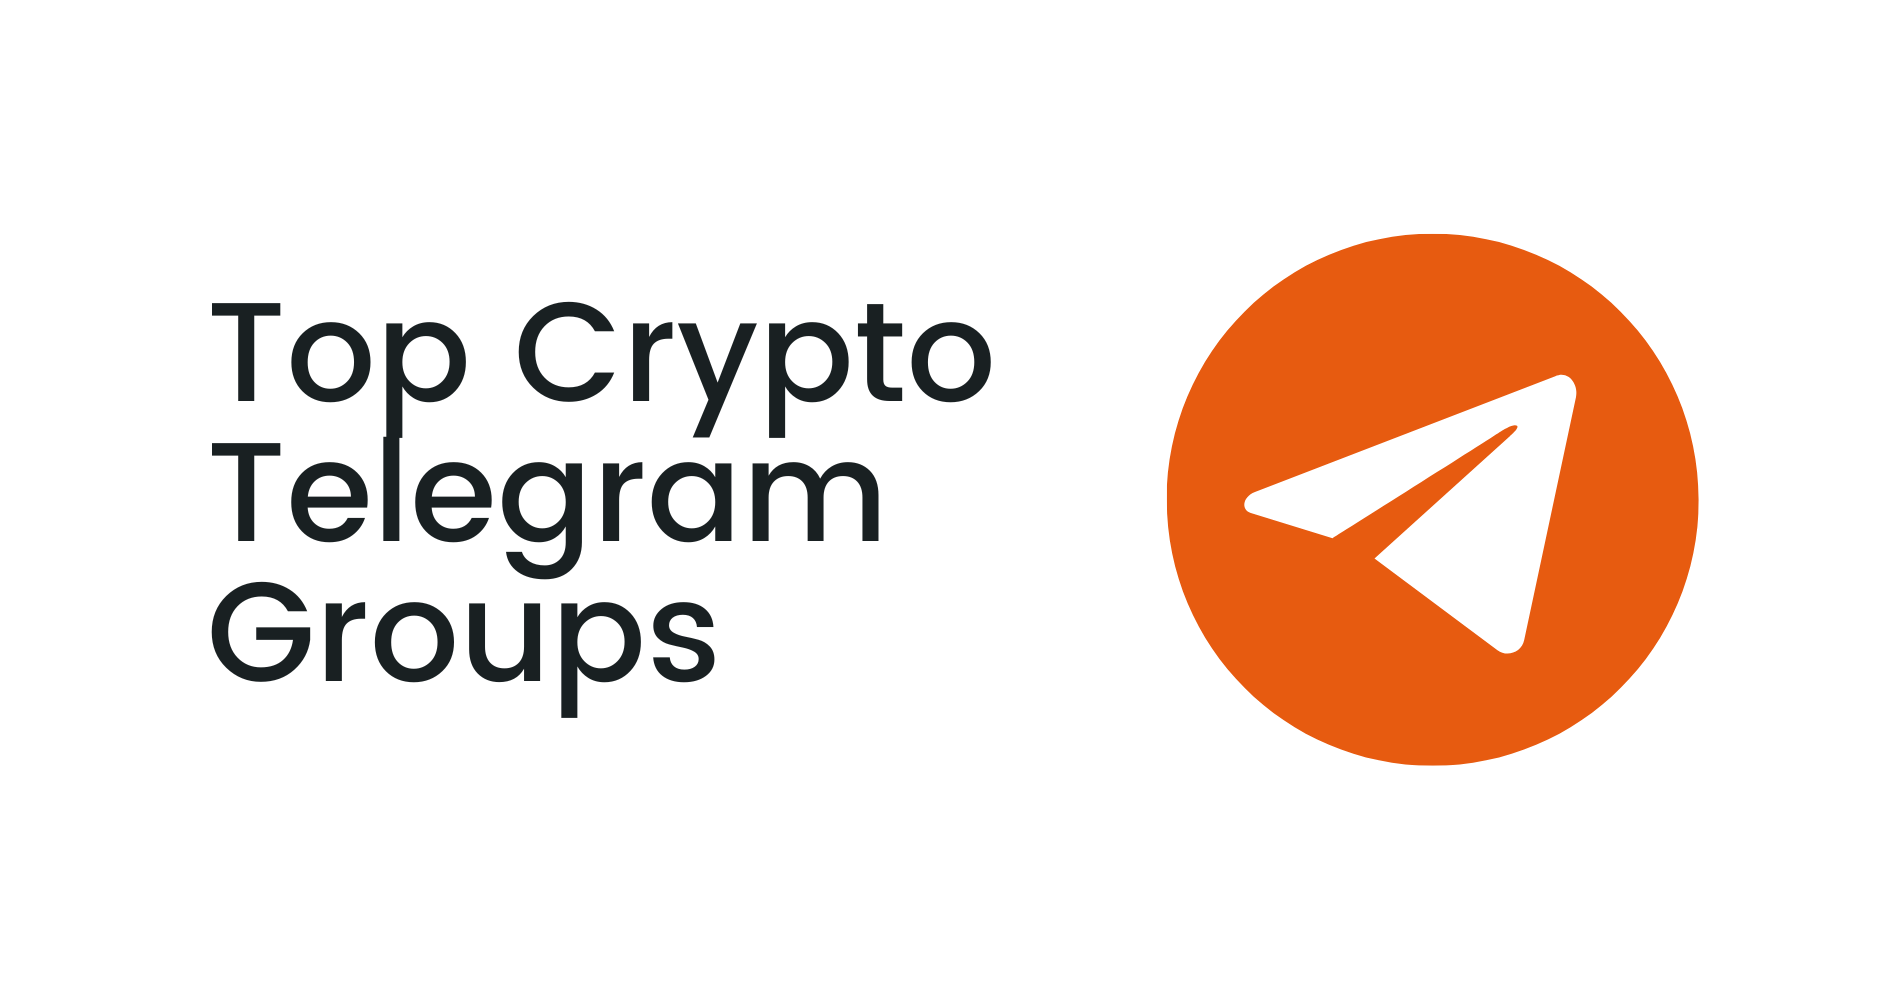 Top Crypto Telegram Groups